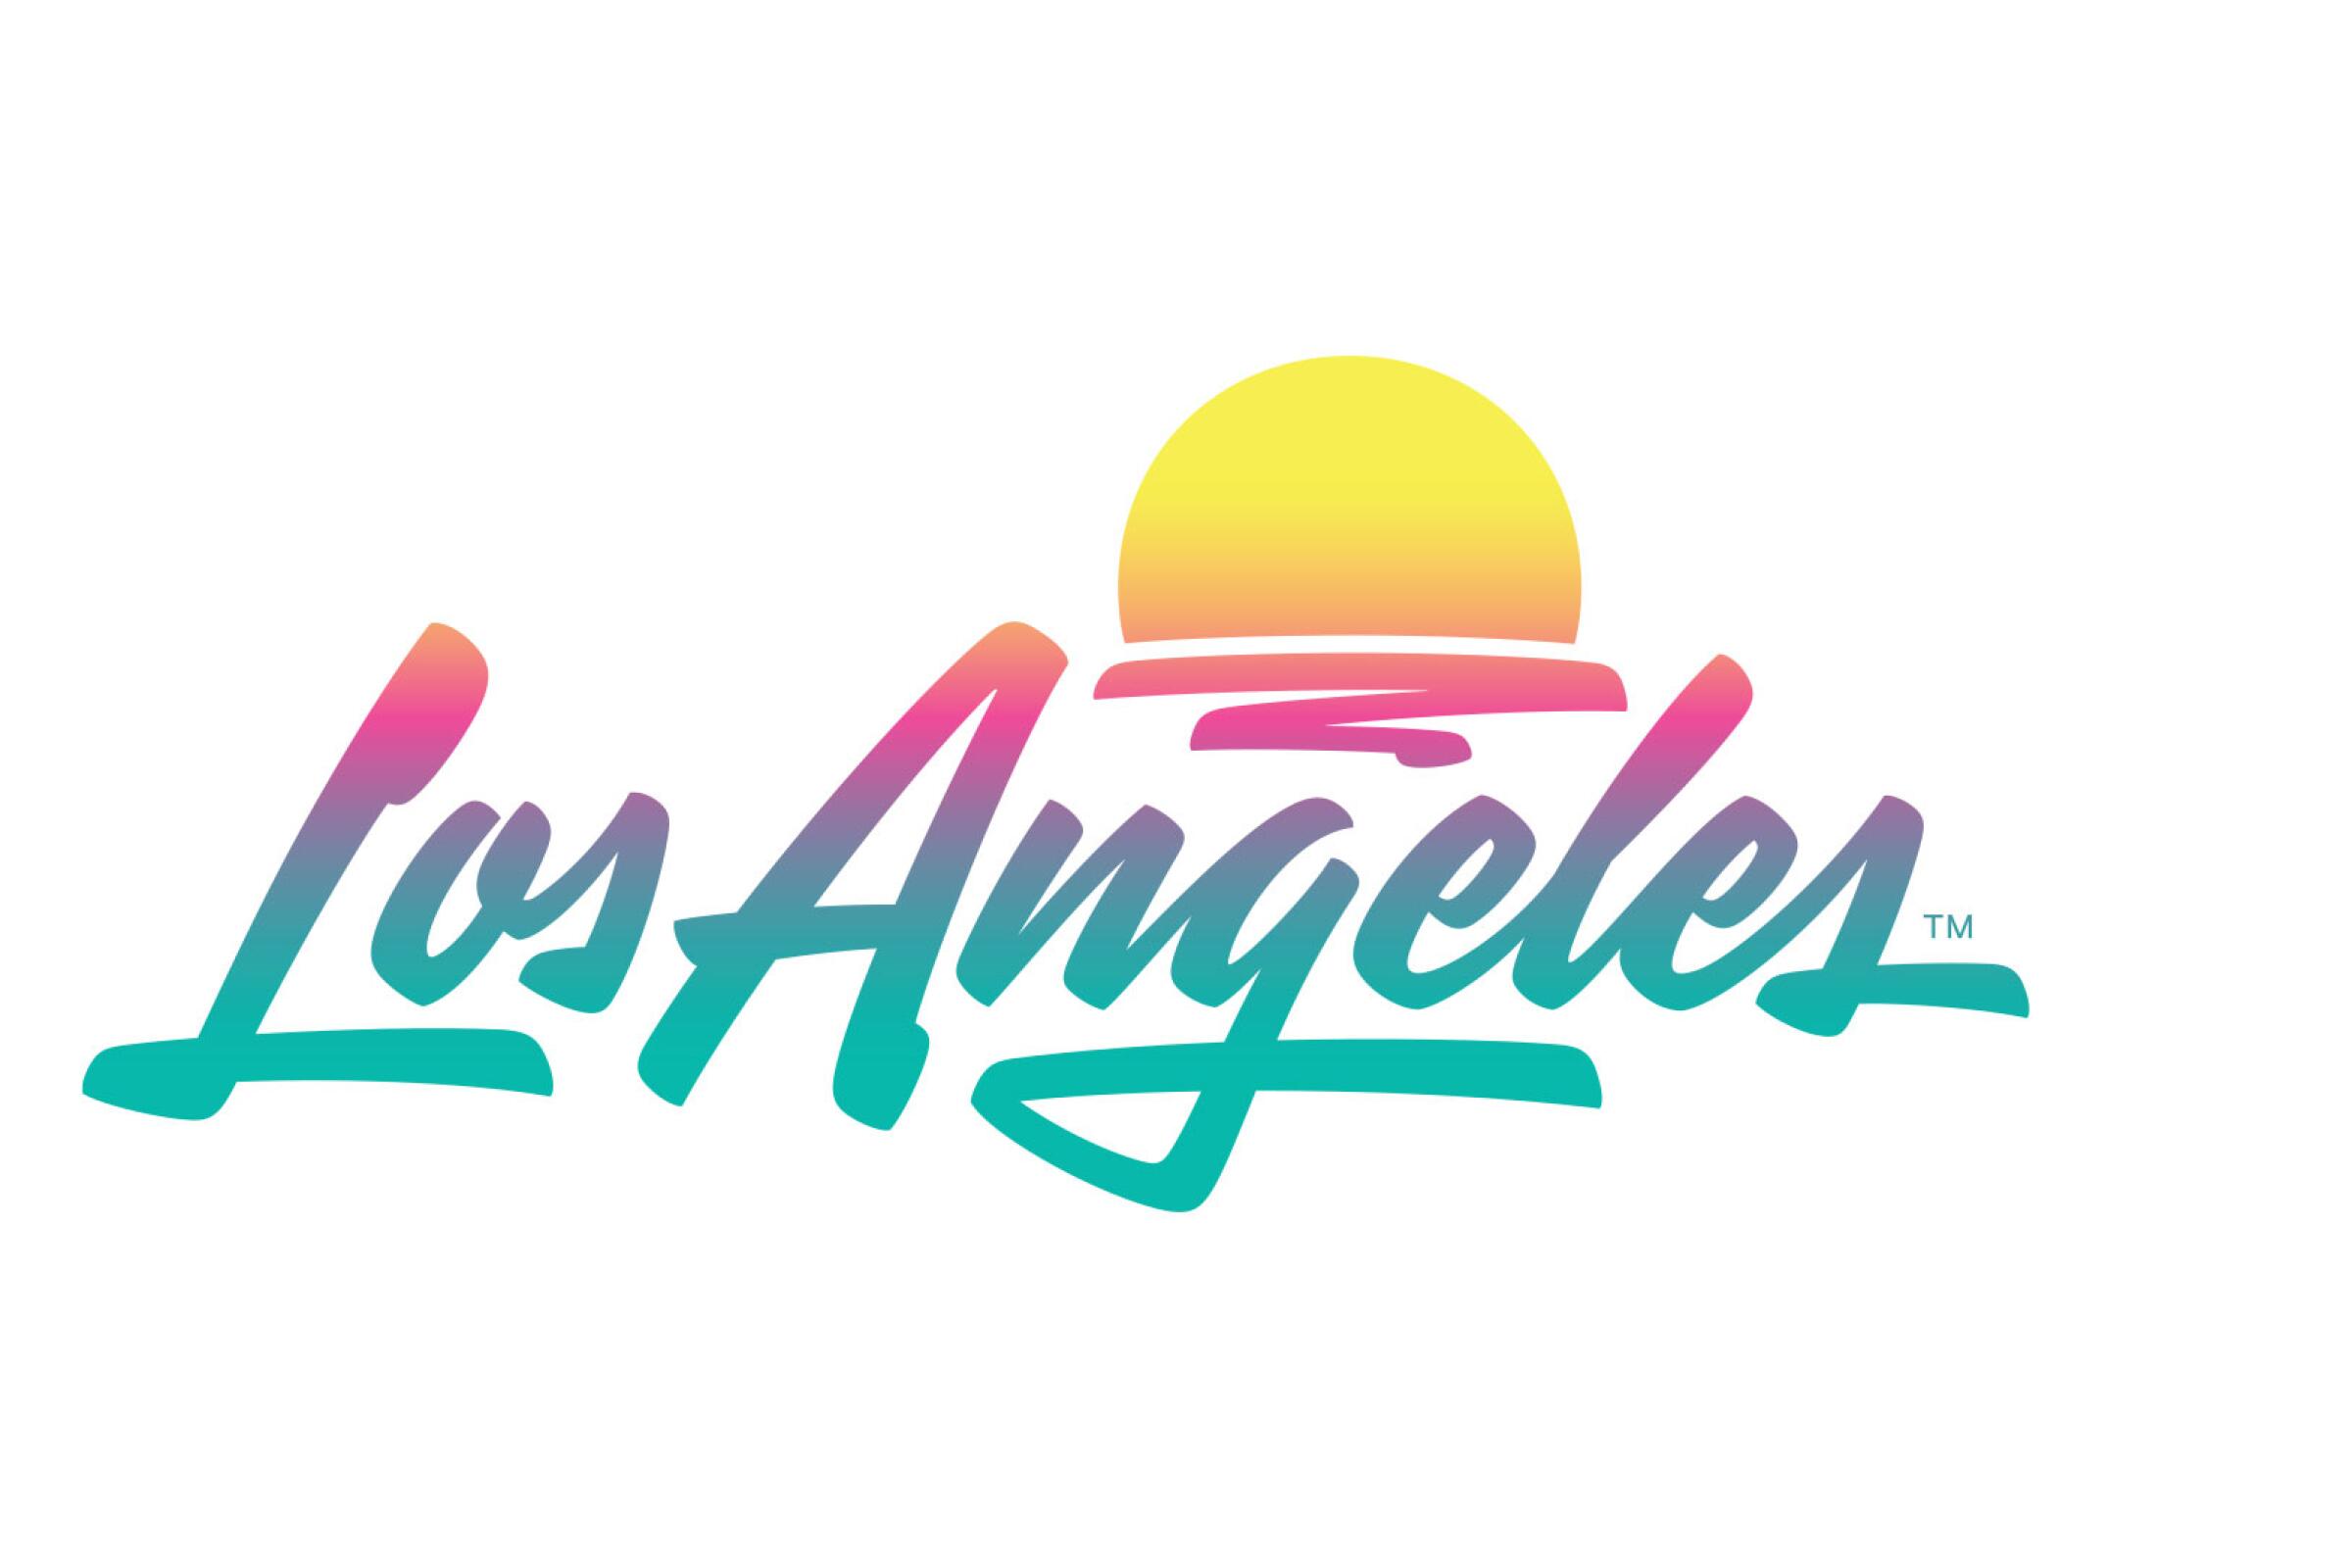 Los Angeles' new tourism logo is so '80s Ocean Pacific - Los